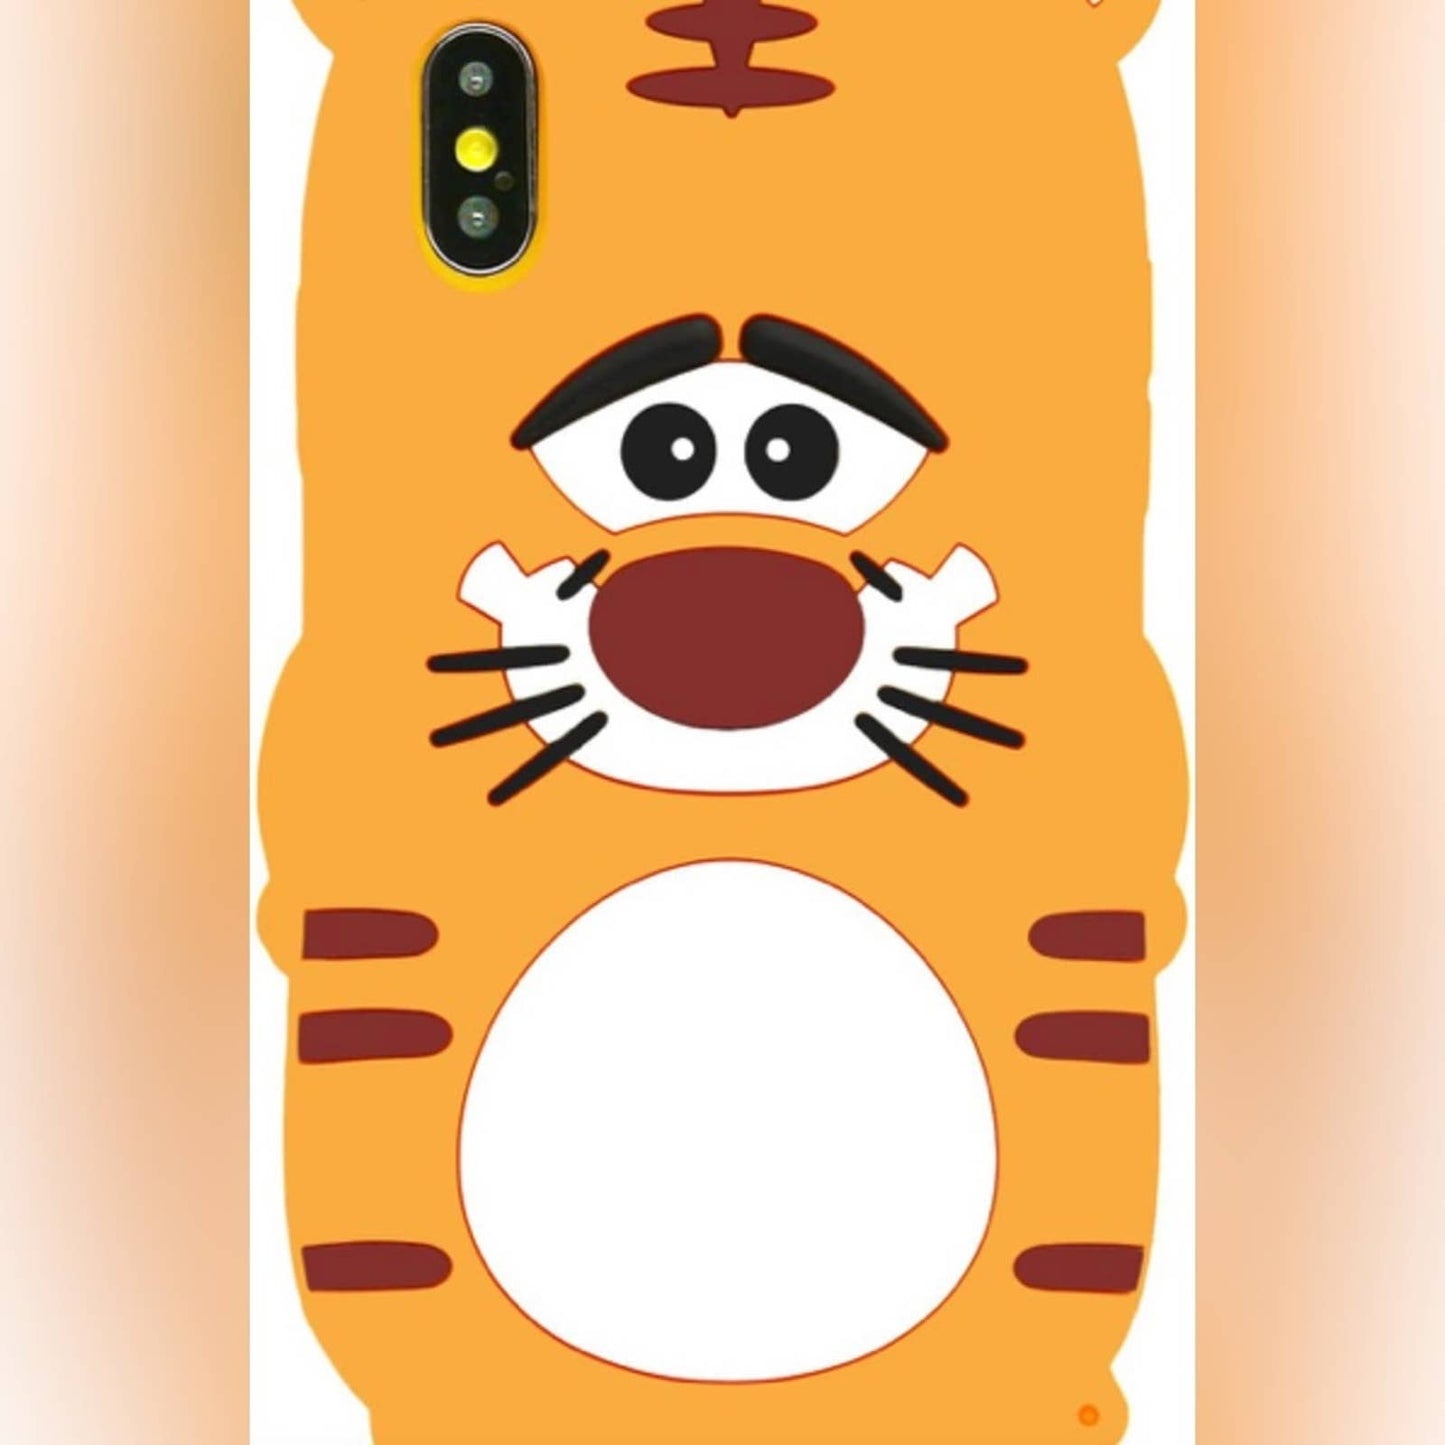 Cabottser Cartoon Tiger Case for iPhone X/Xs / 10 / 10s 5.8"